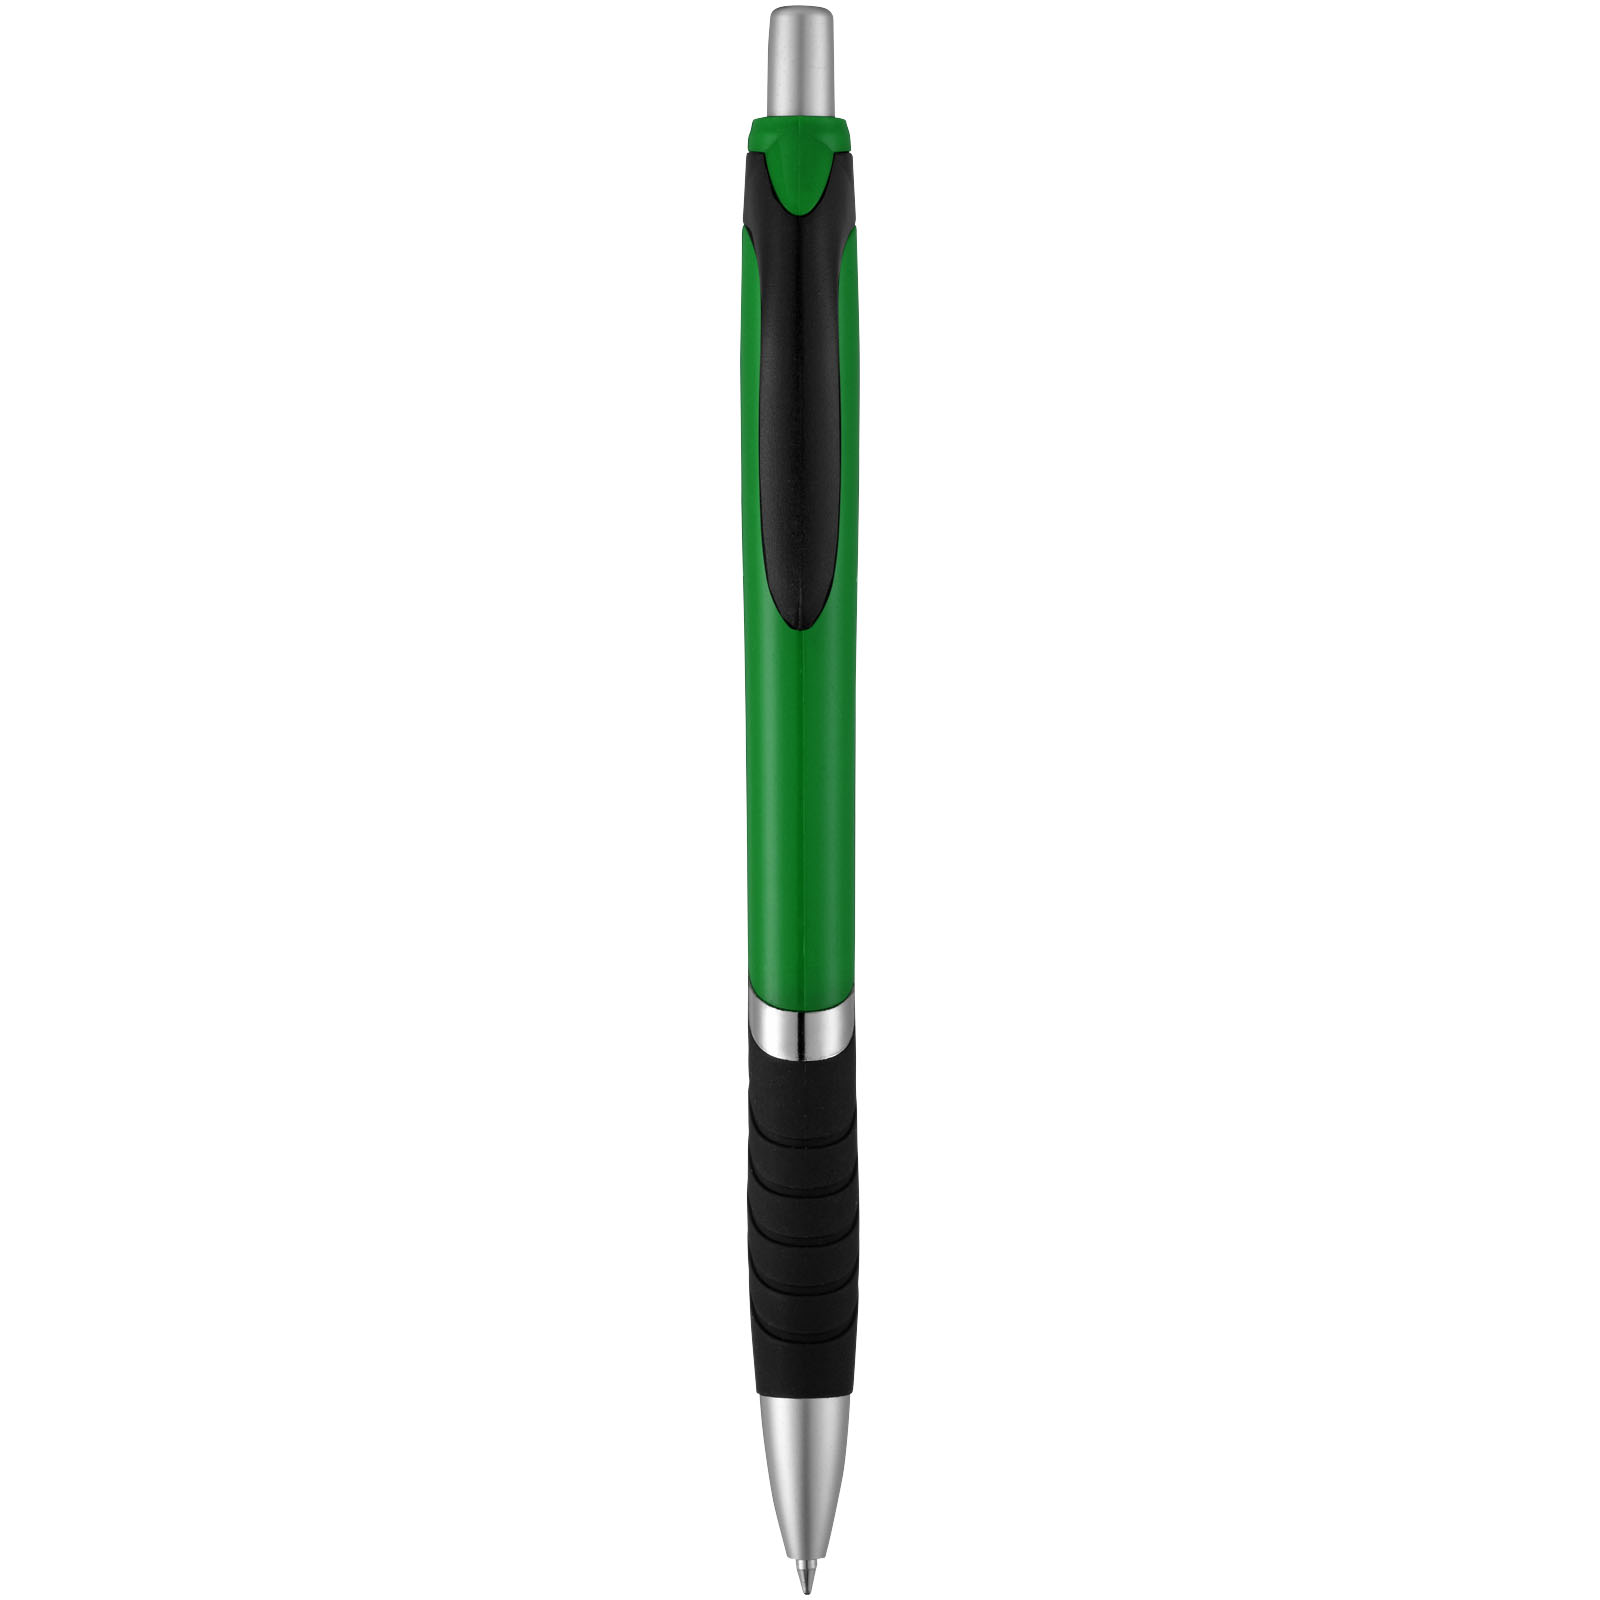 Advertising Ballpoint Pens - Turbo ballpoint pen with rubber grip - 1